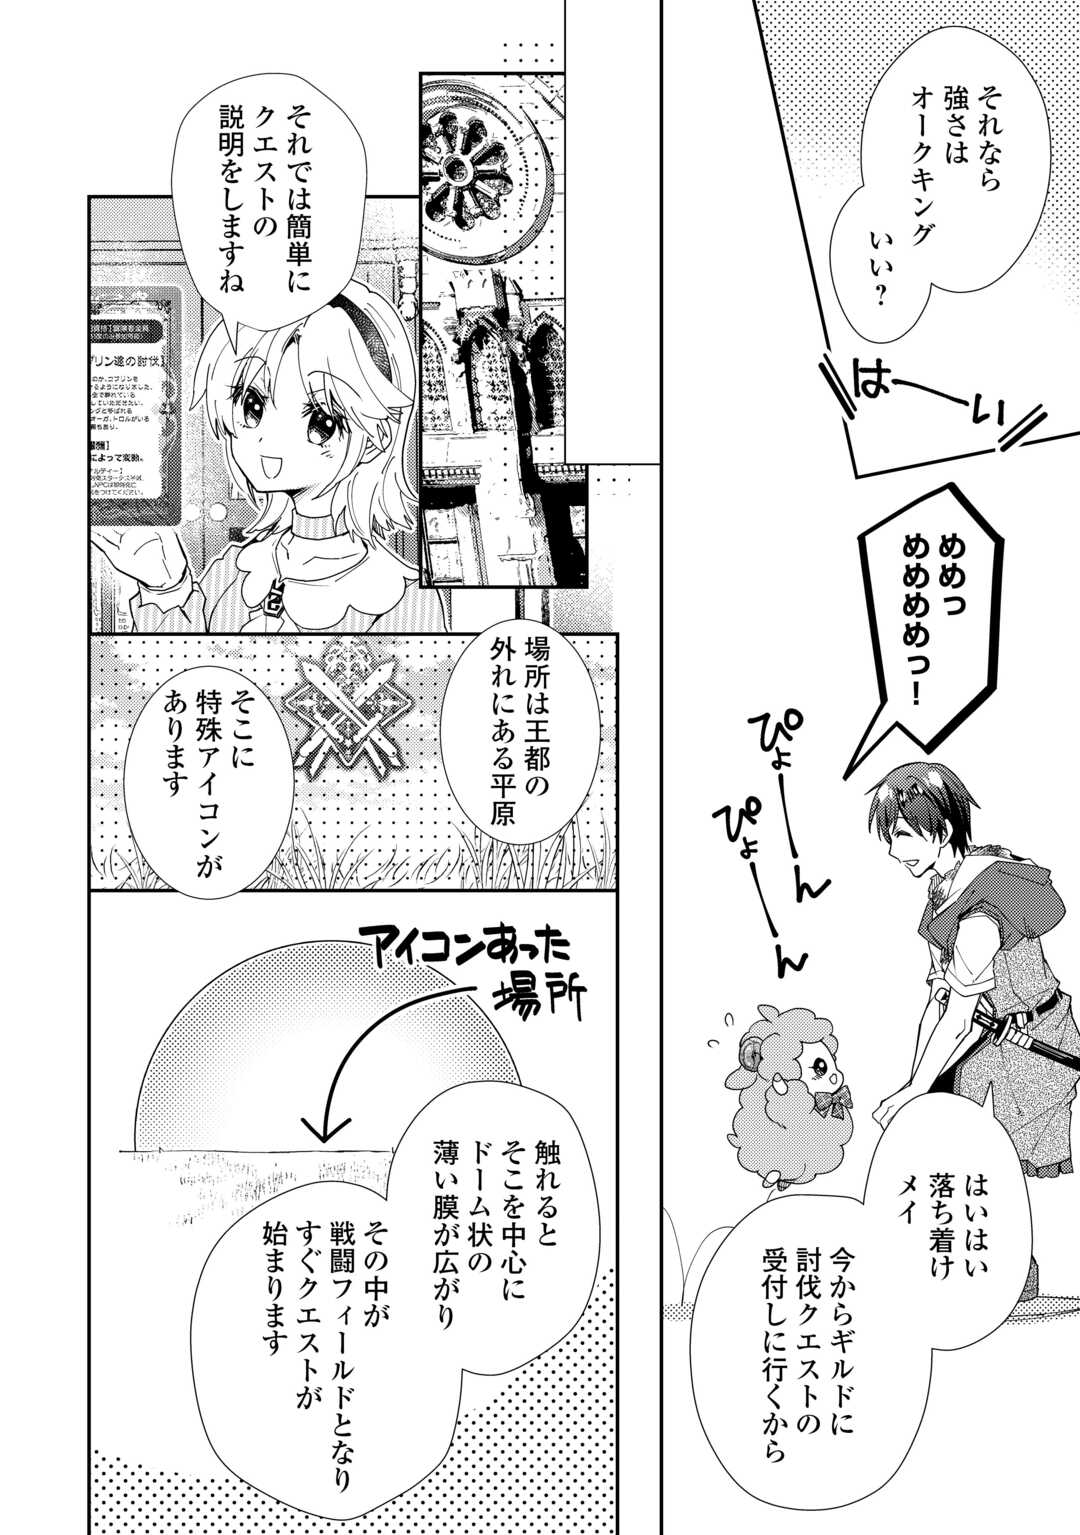 Nonbiri VRMMOki - Chapter 83 - Page 10